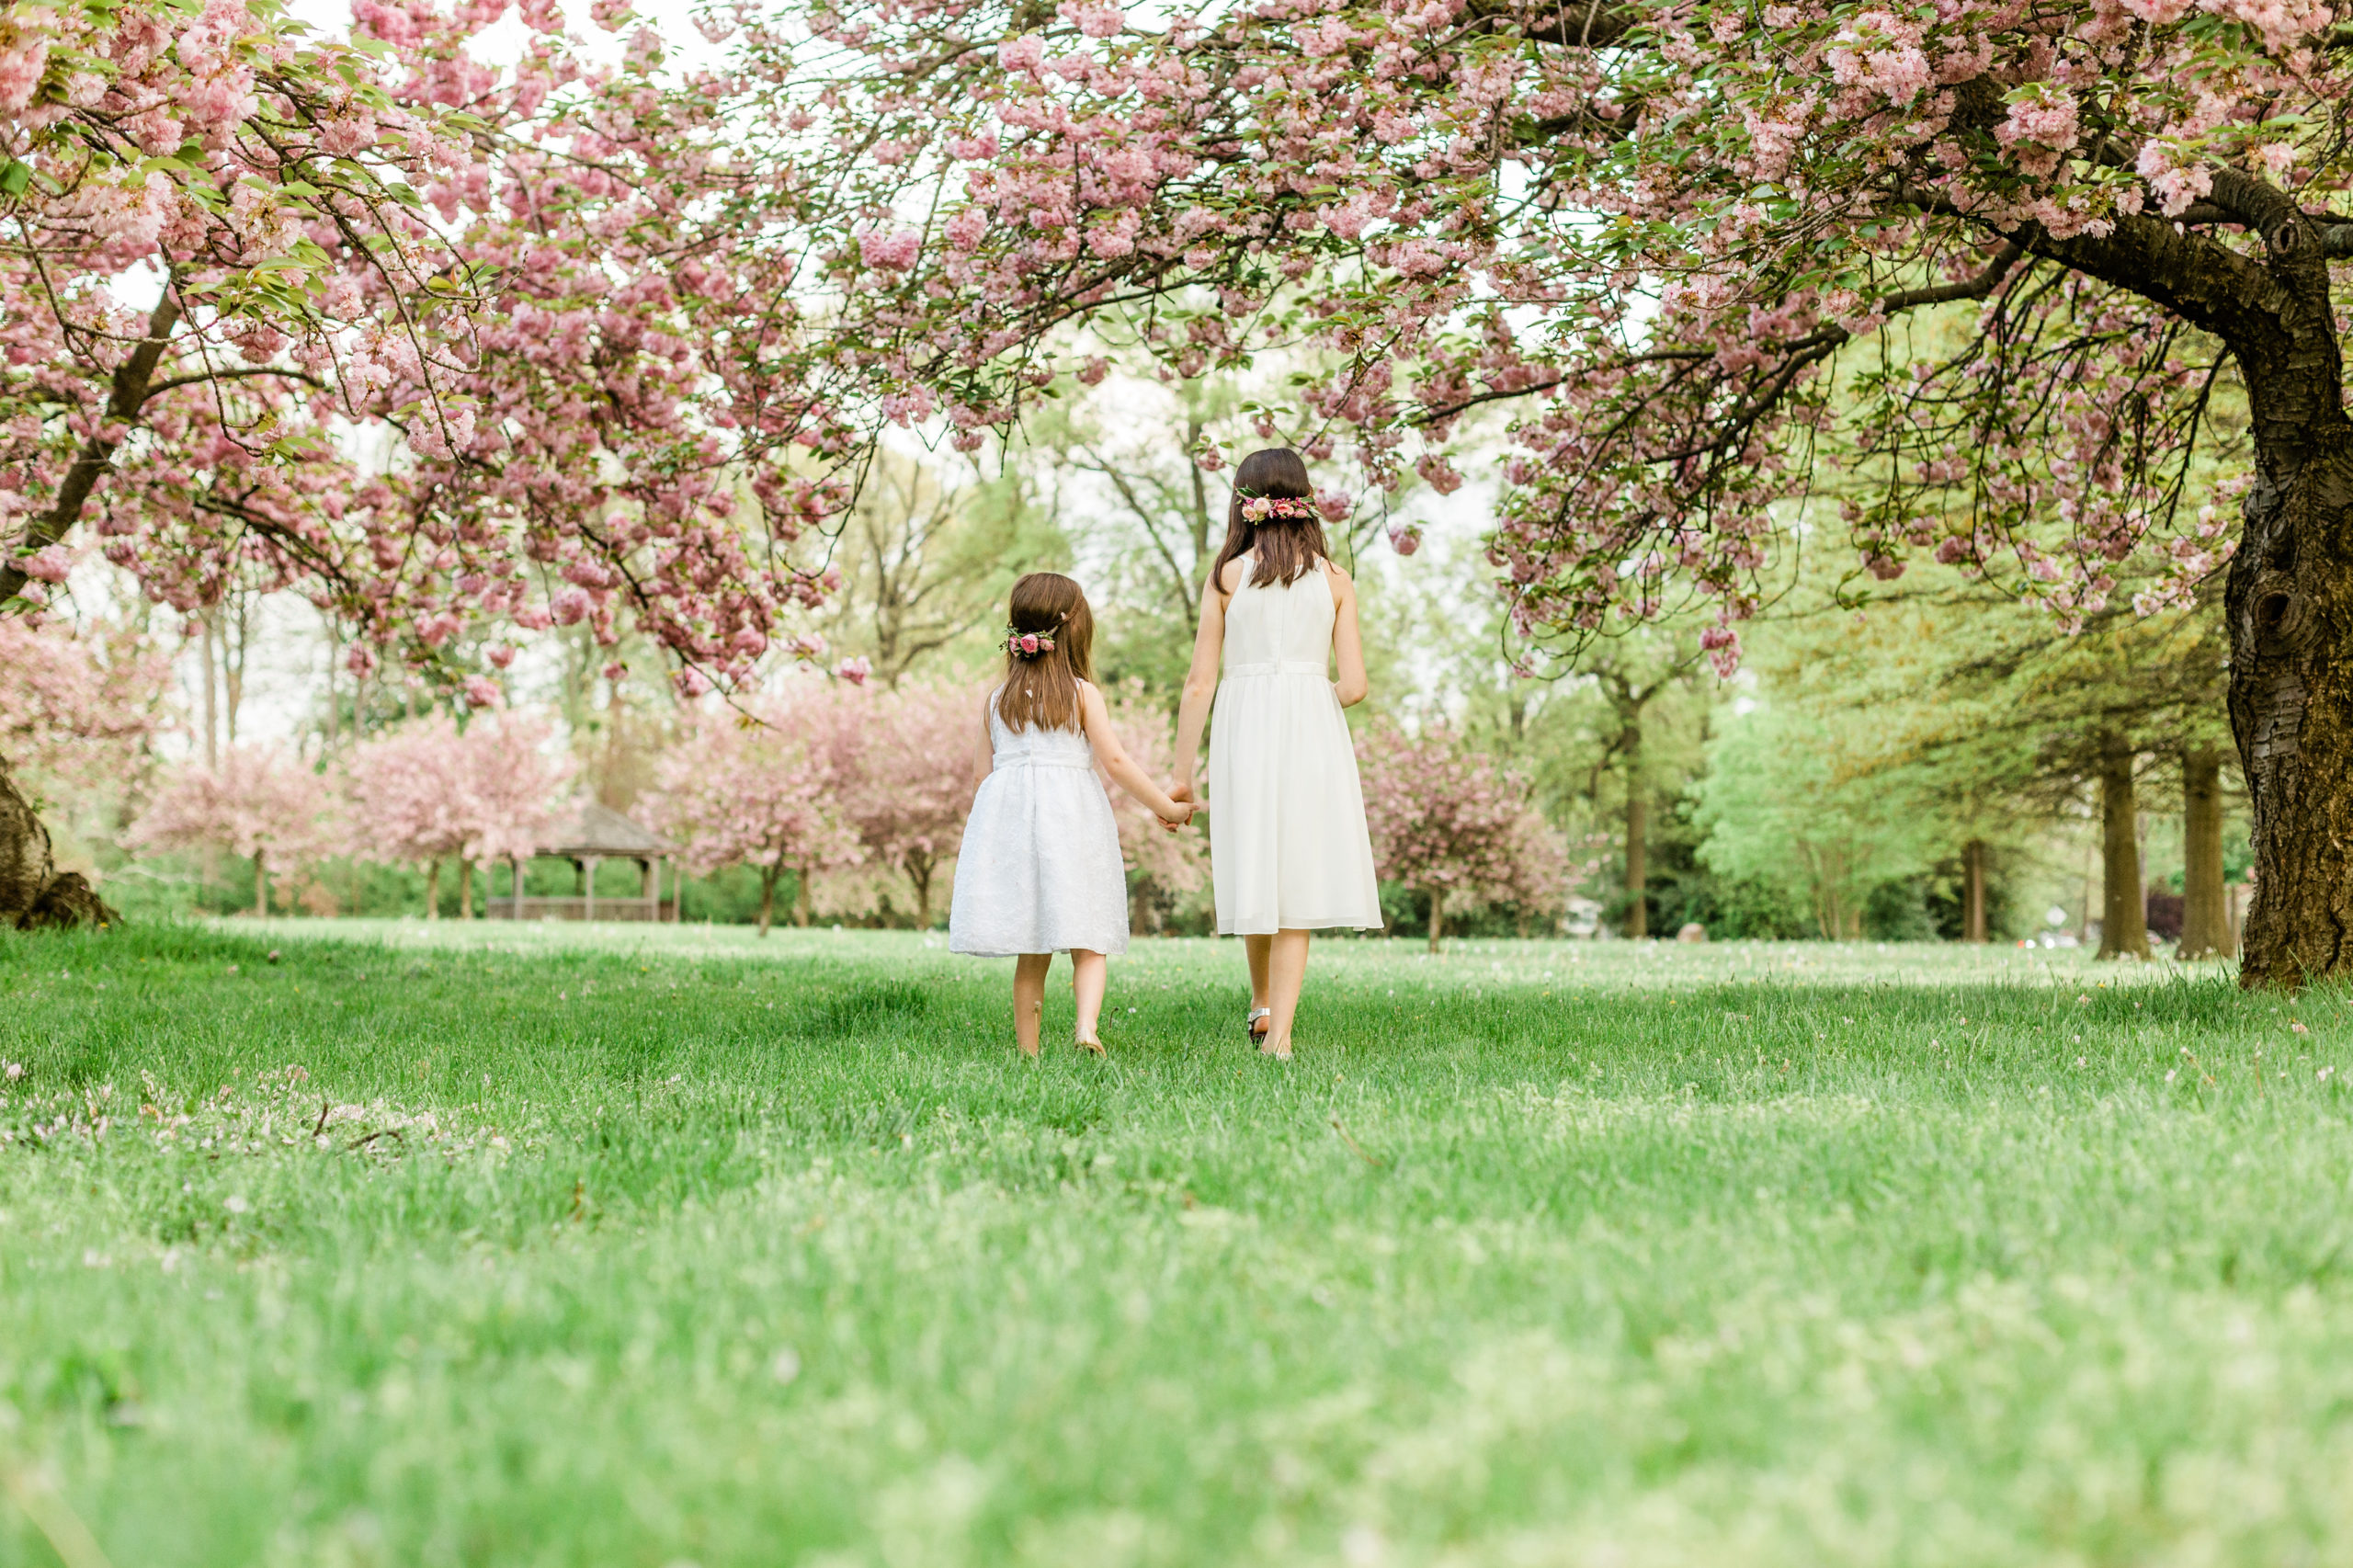 Little girls holding hands walking under cherry blossom trees in westfield photo